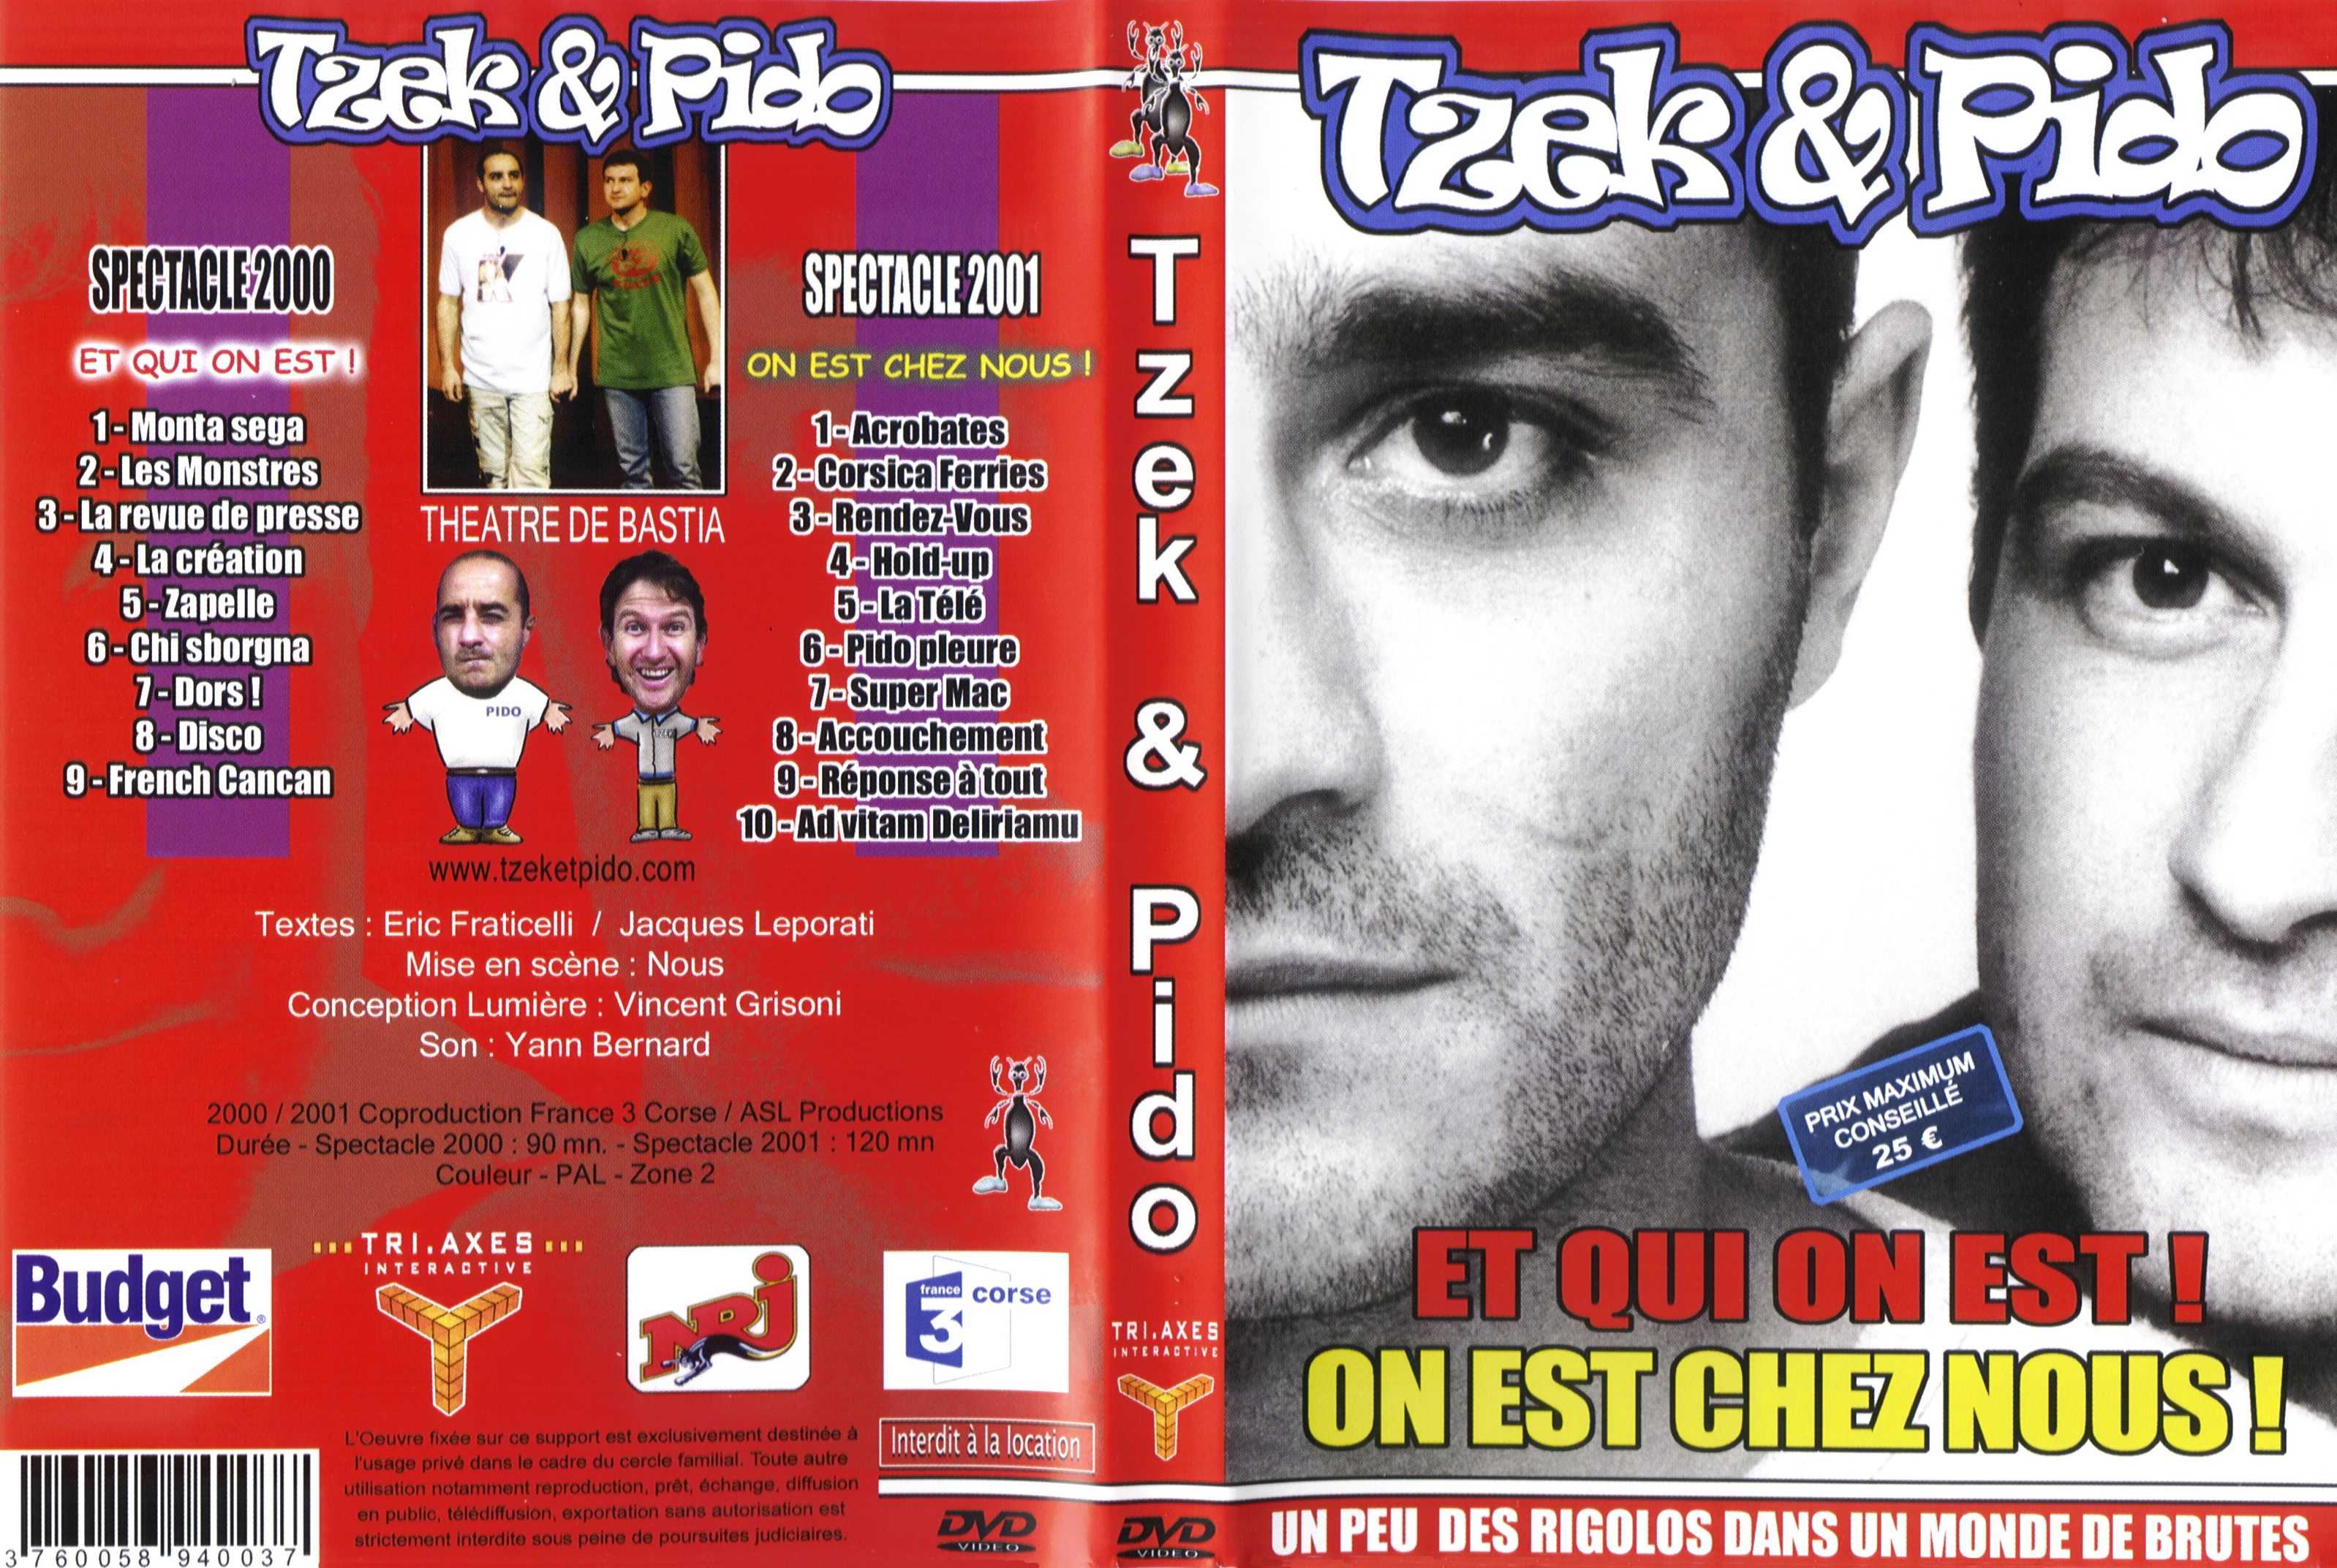 Jaquette DVD Tzek et Pido spectacle 2000 2001